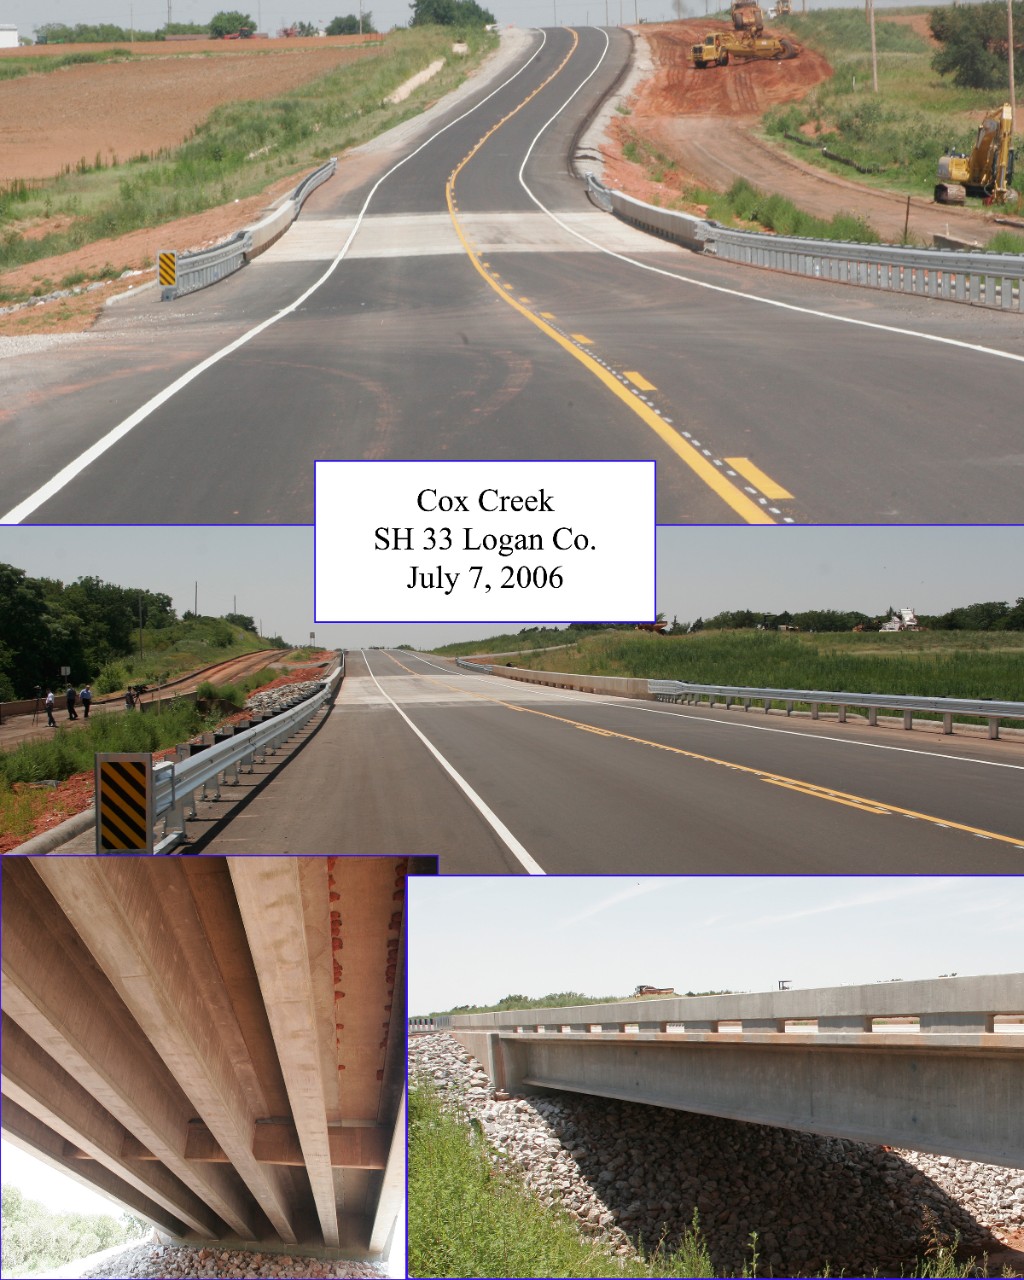 /content/dam/ok/en/odot/images/roads-fund-sh-33-cox-creek-after.jpg